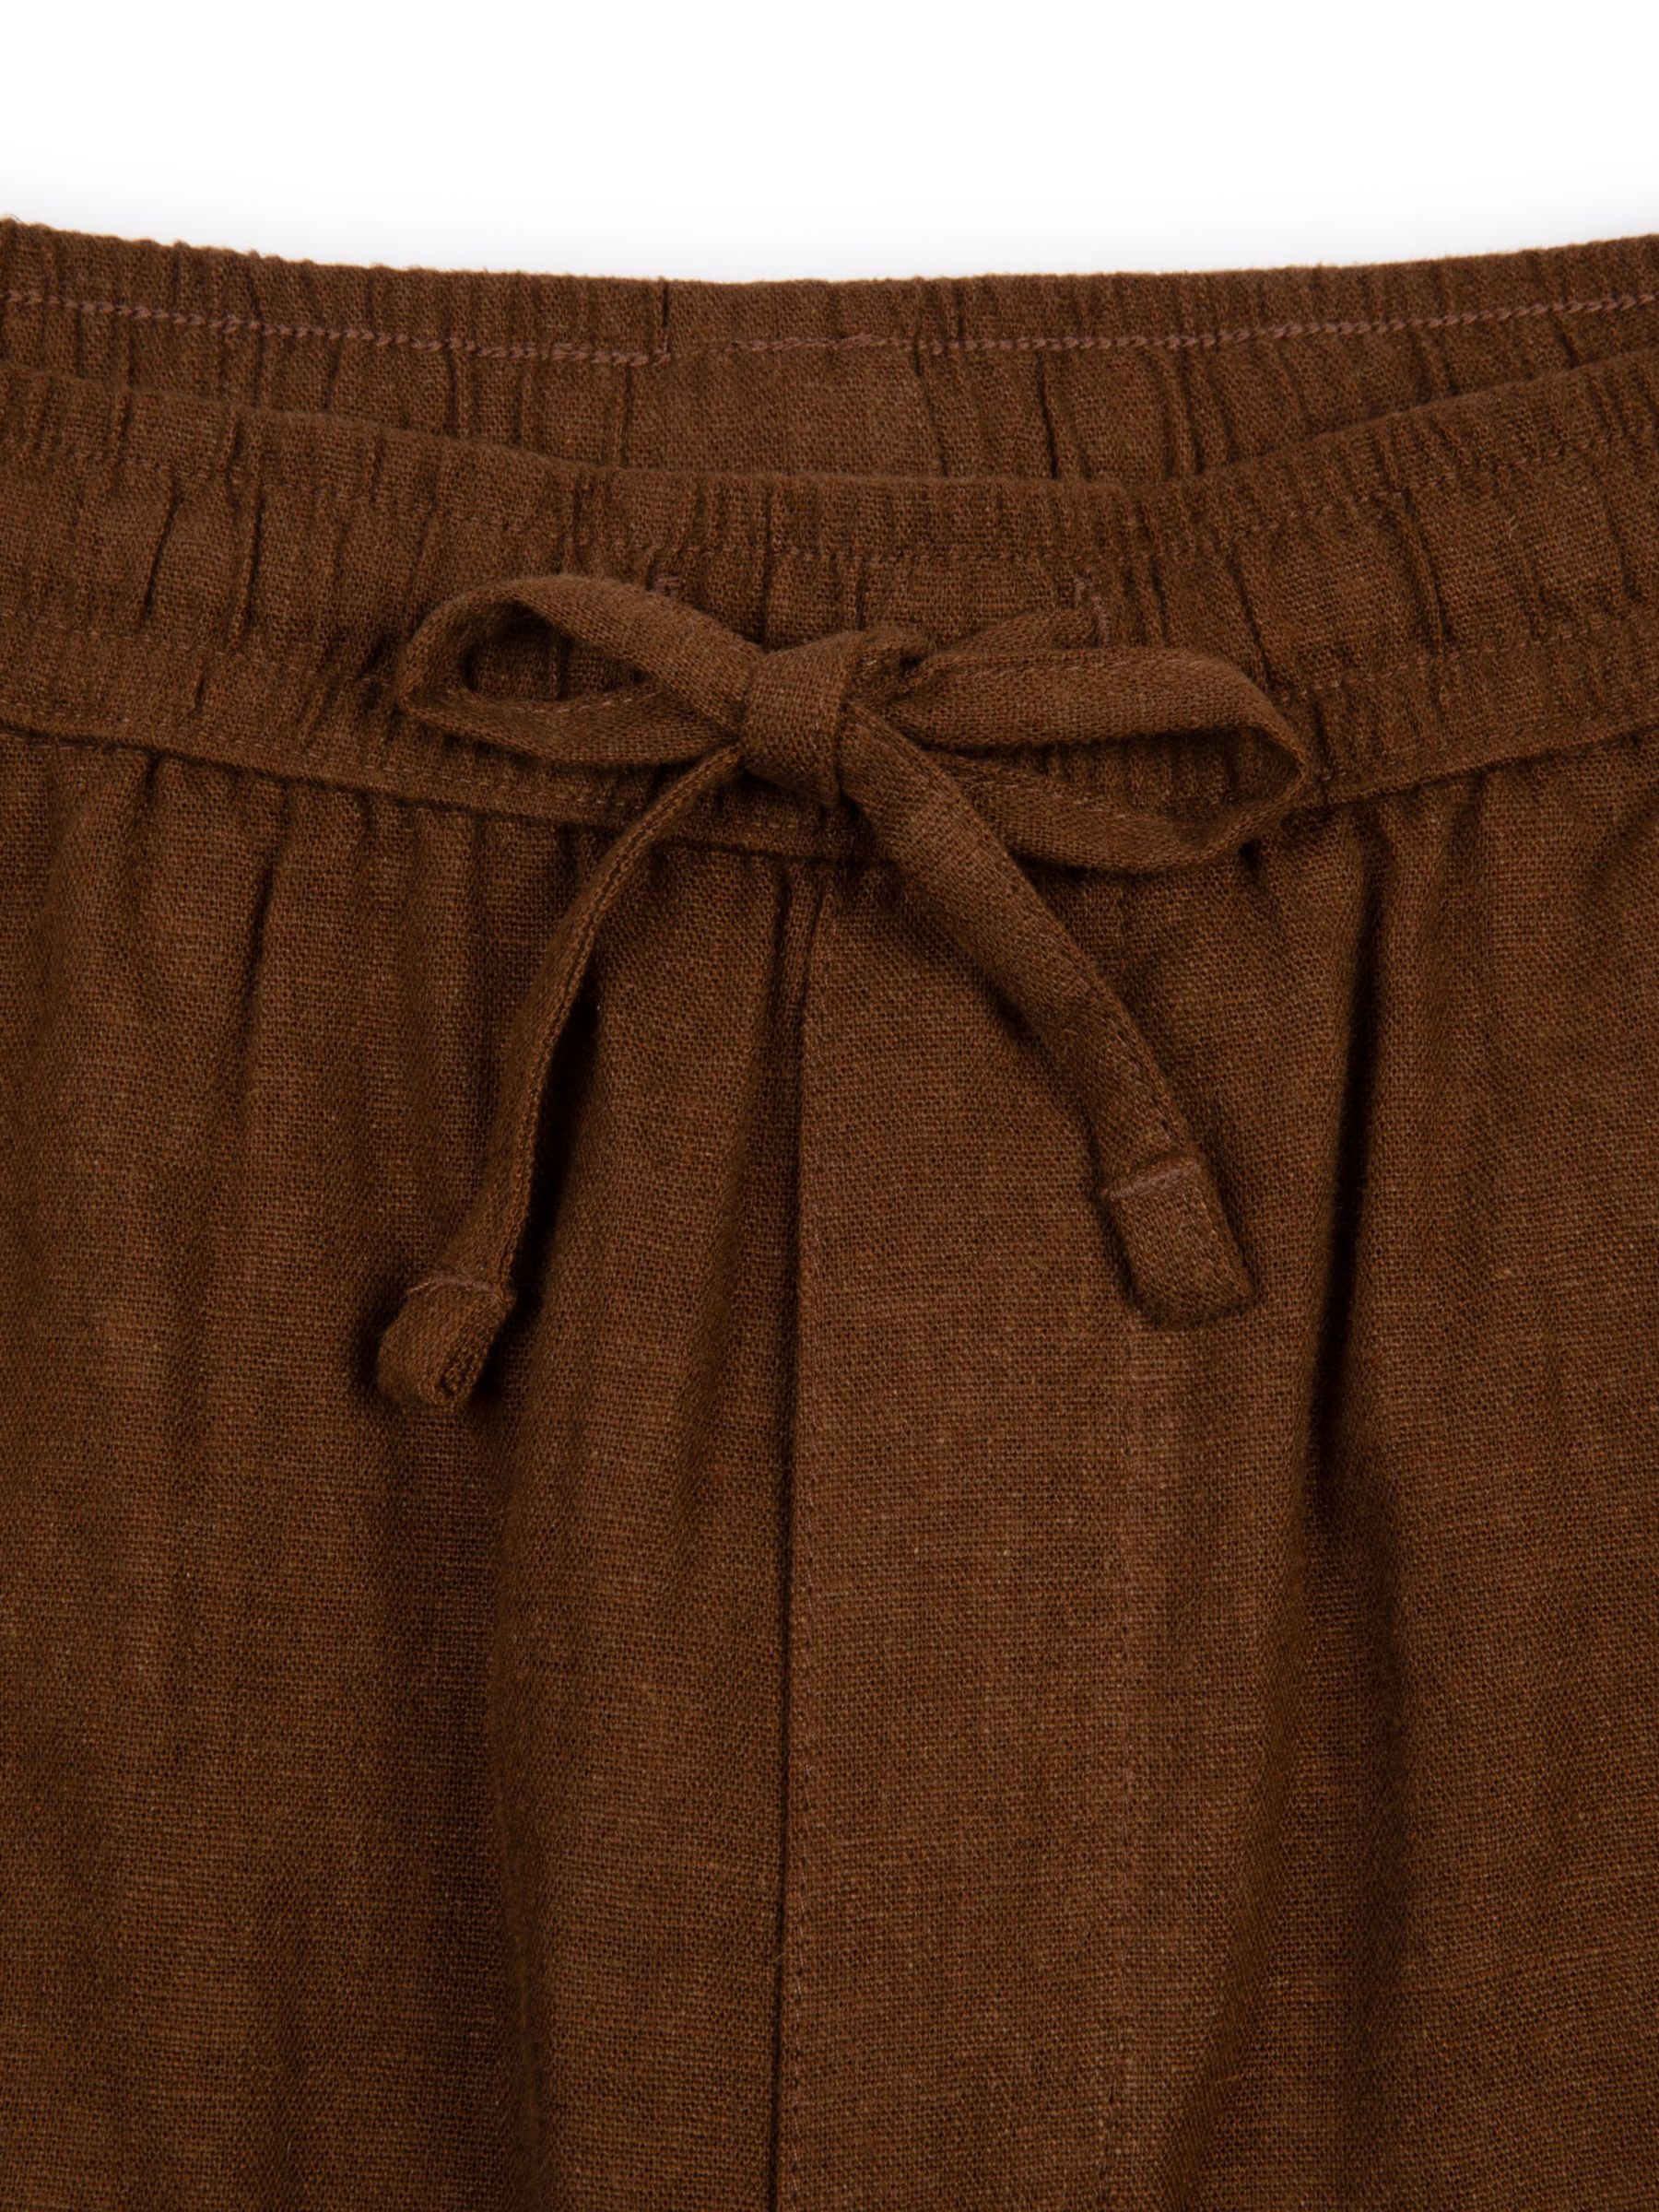 Chelsea Peers Linen Blend Shorts, Brown, S